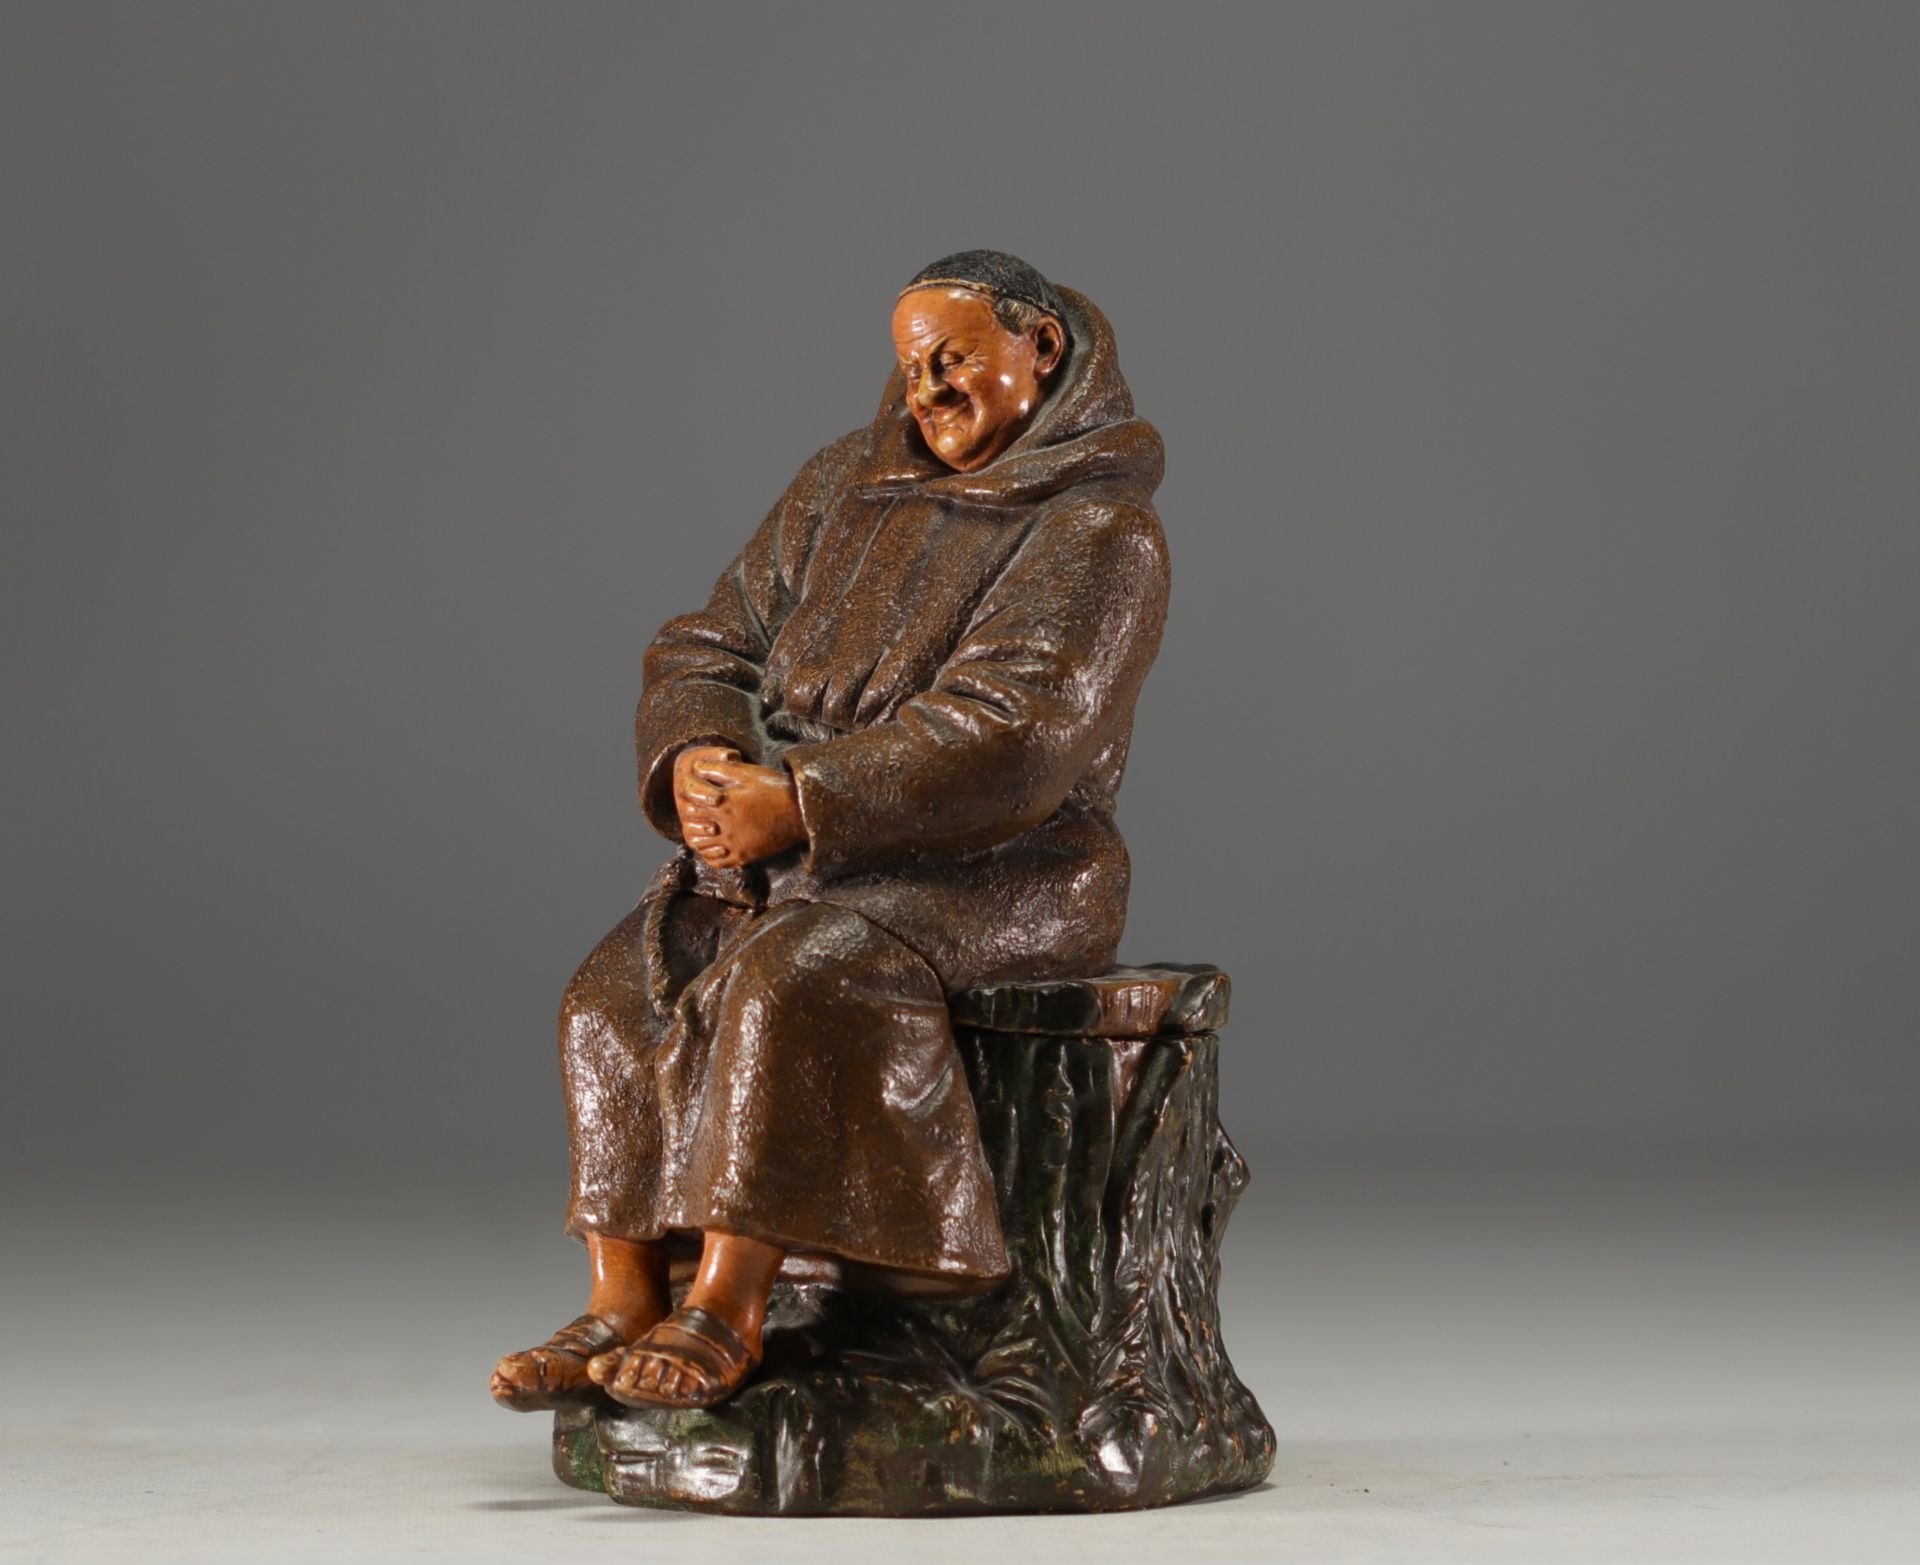 Bernhard BLOCH (1836-1909) "The monk at siesta" Polychrome terracotta tobacco pot.